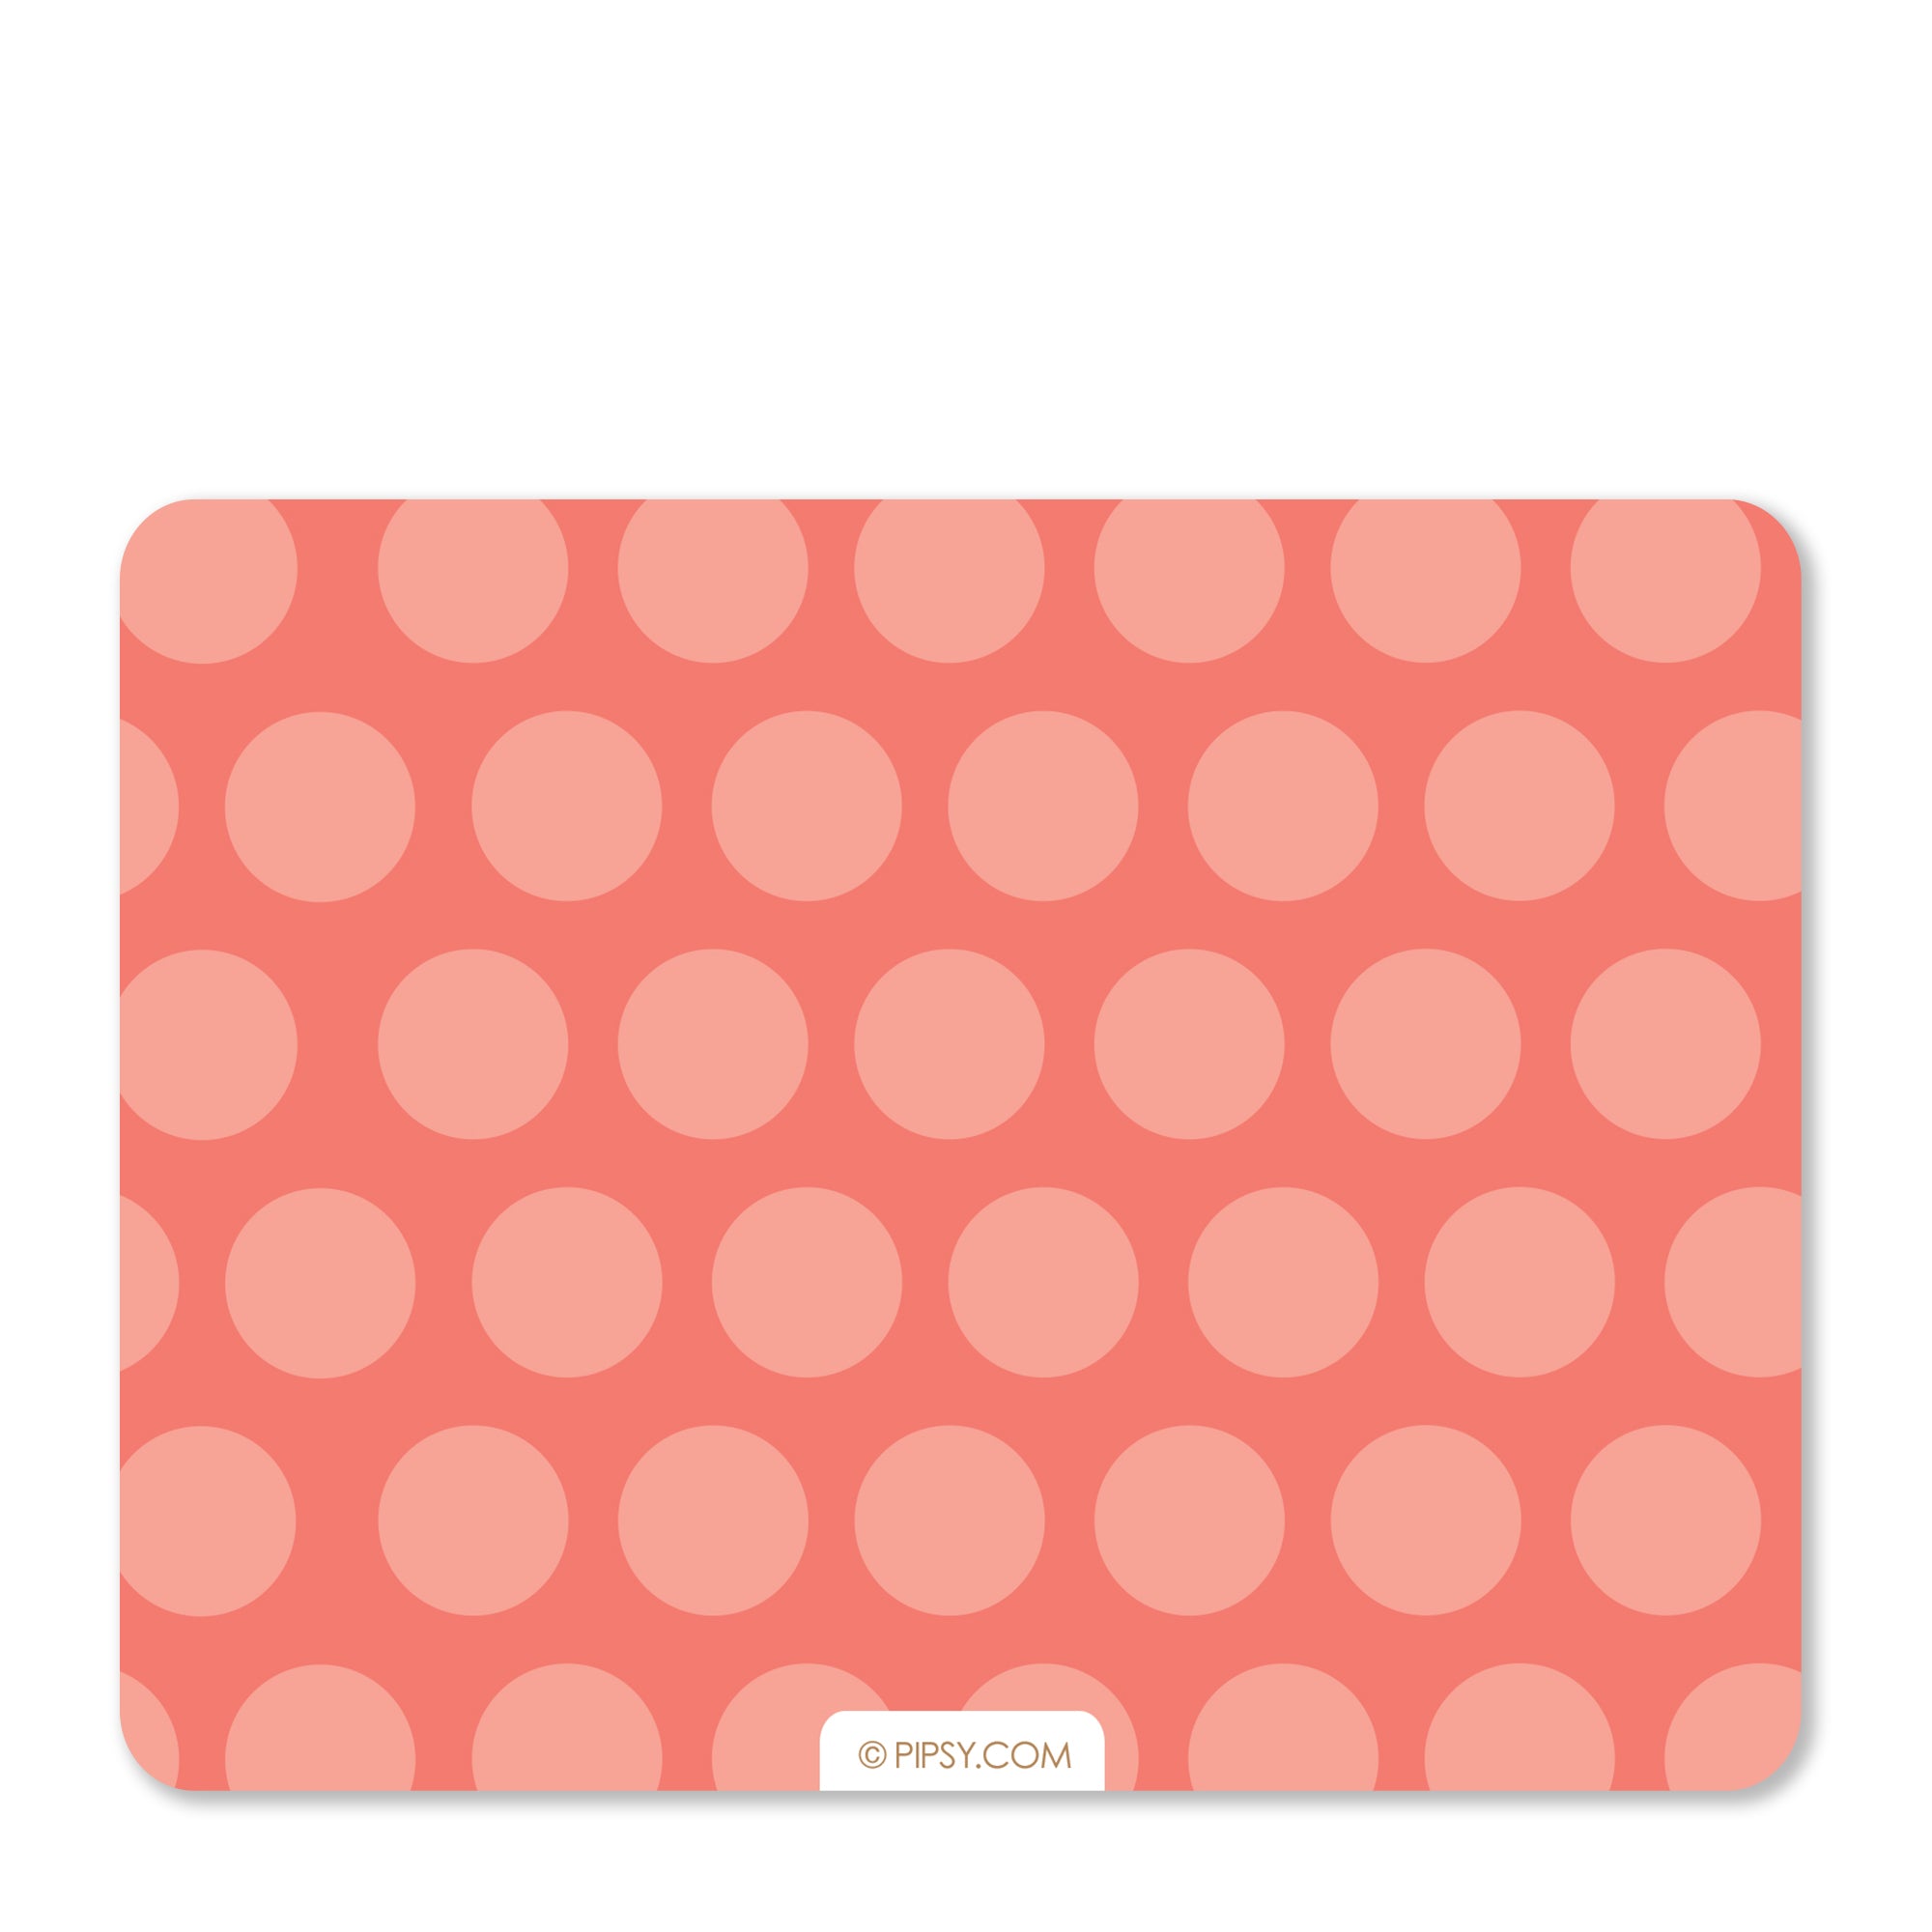 gymnastics girl flat notecards stationery, back view with polka dot pattern